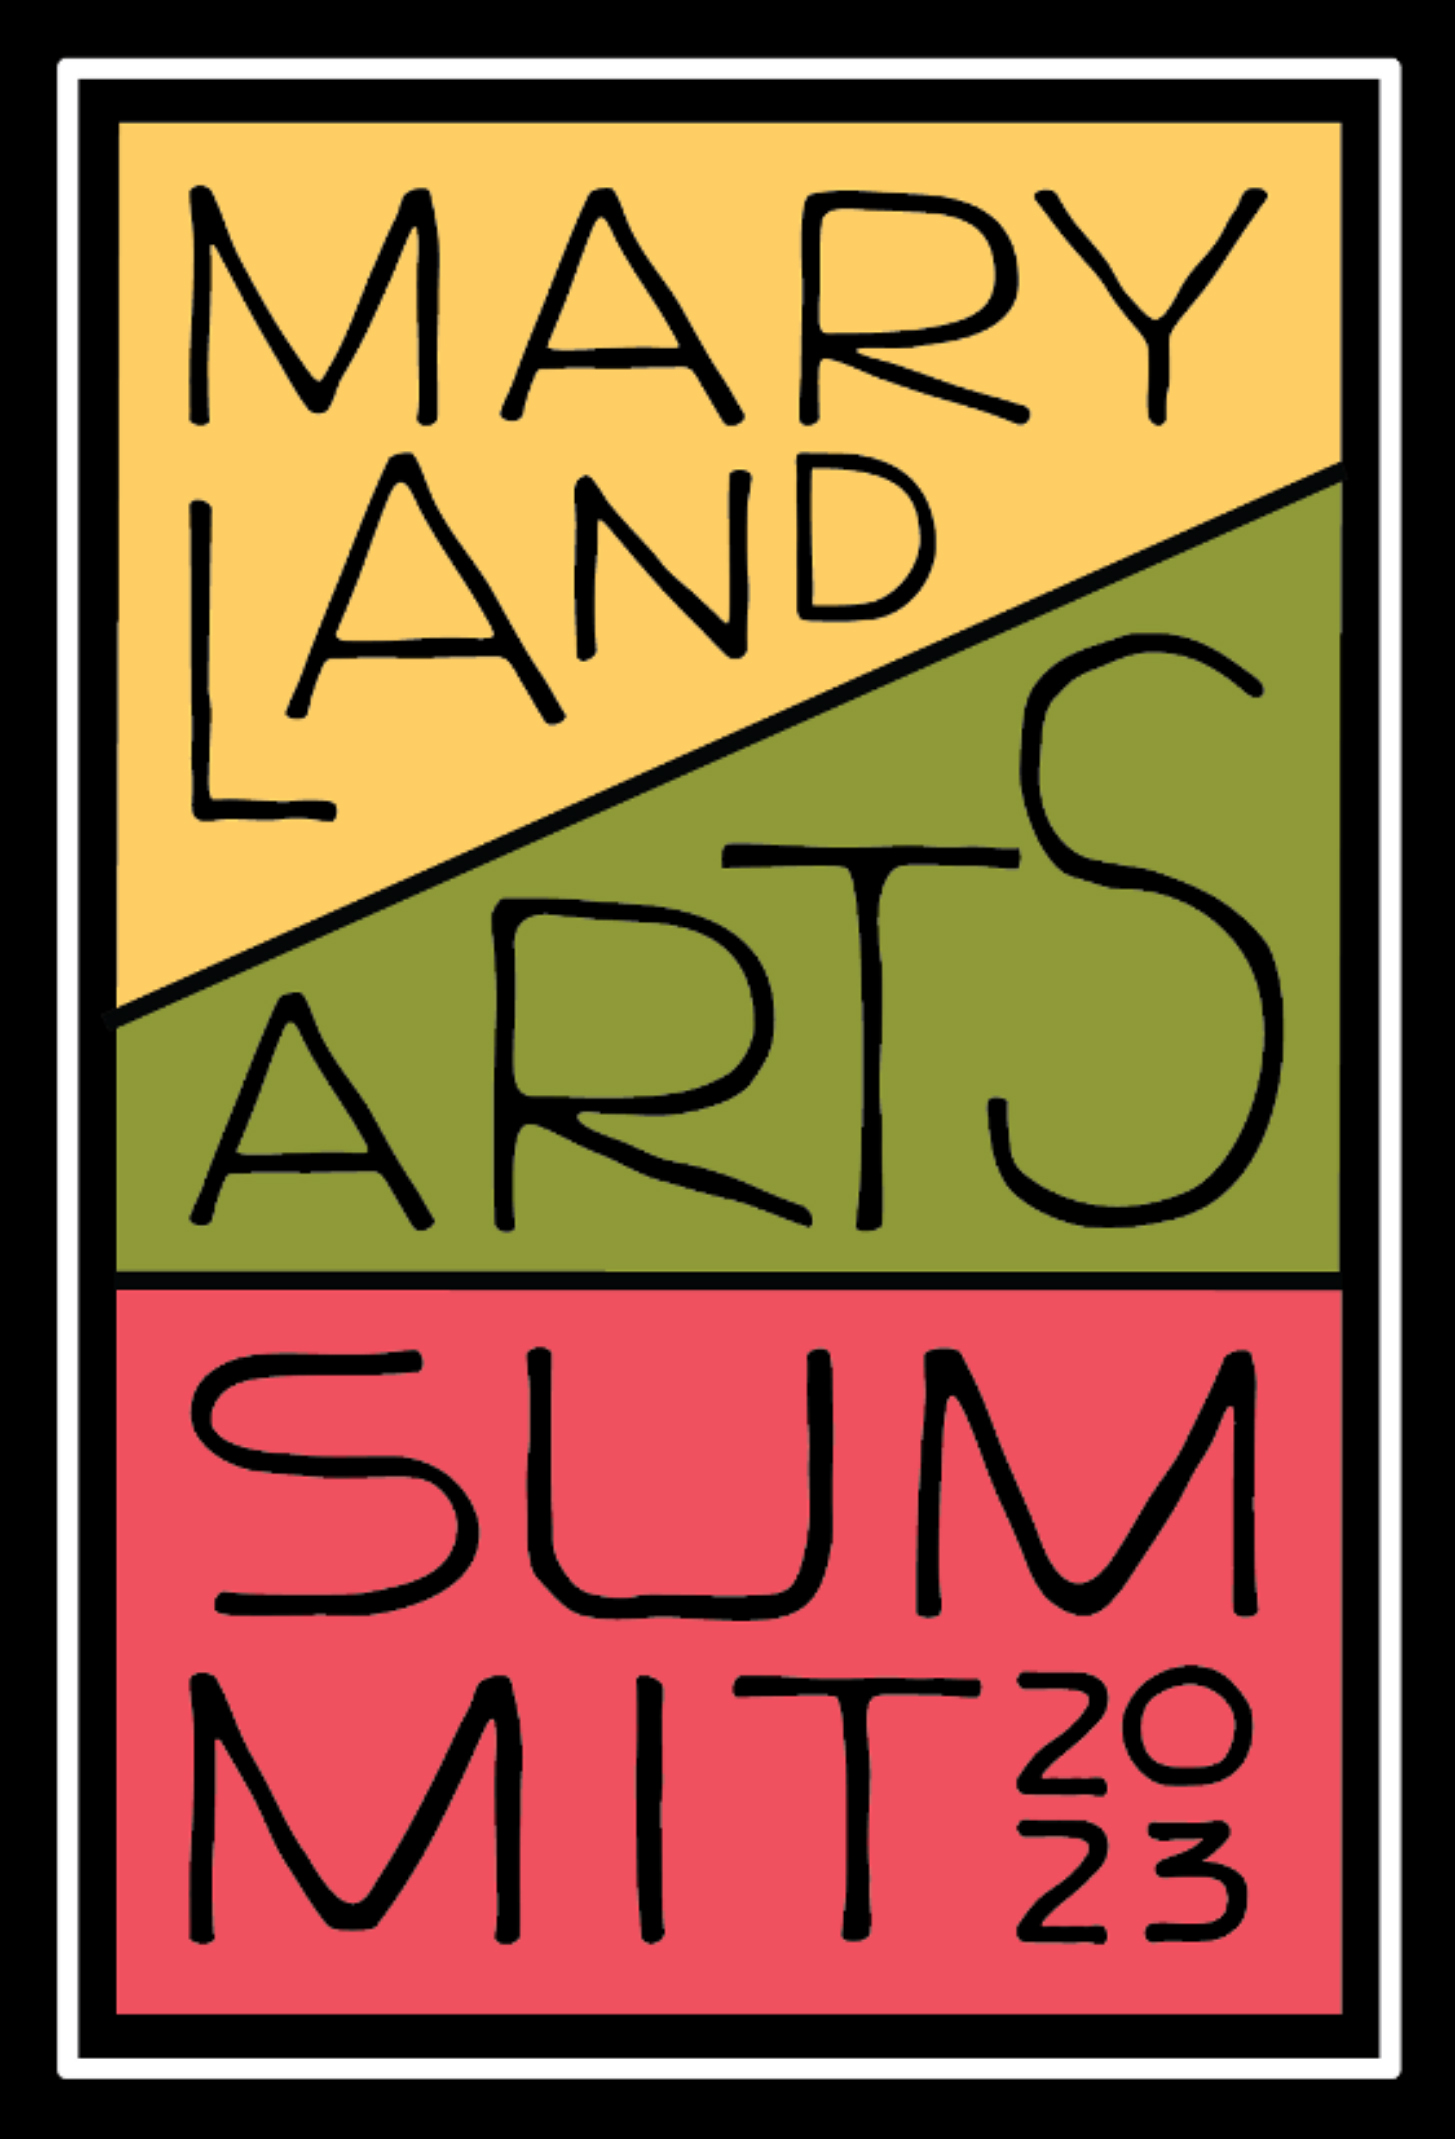 A design says Maryland Arts Summit 2023